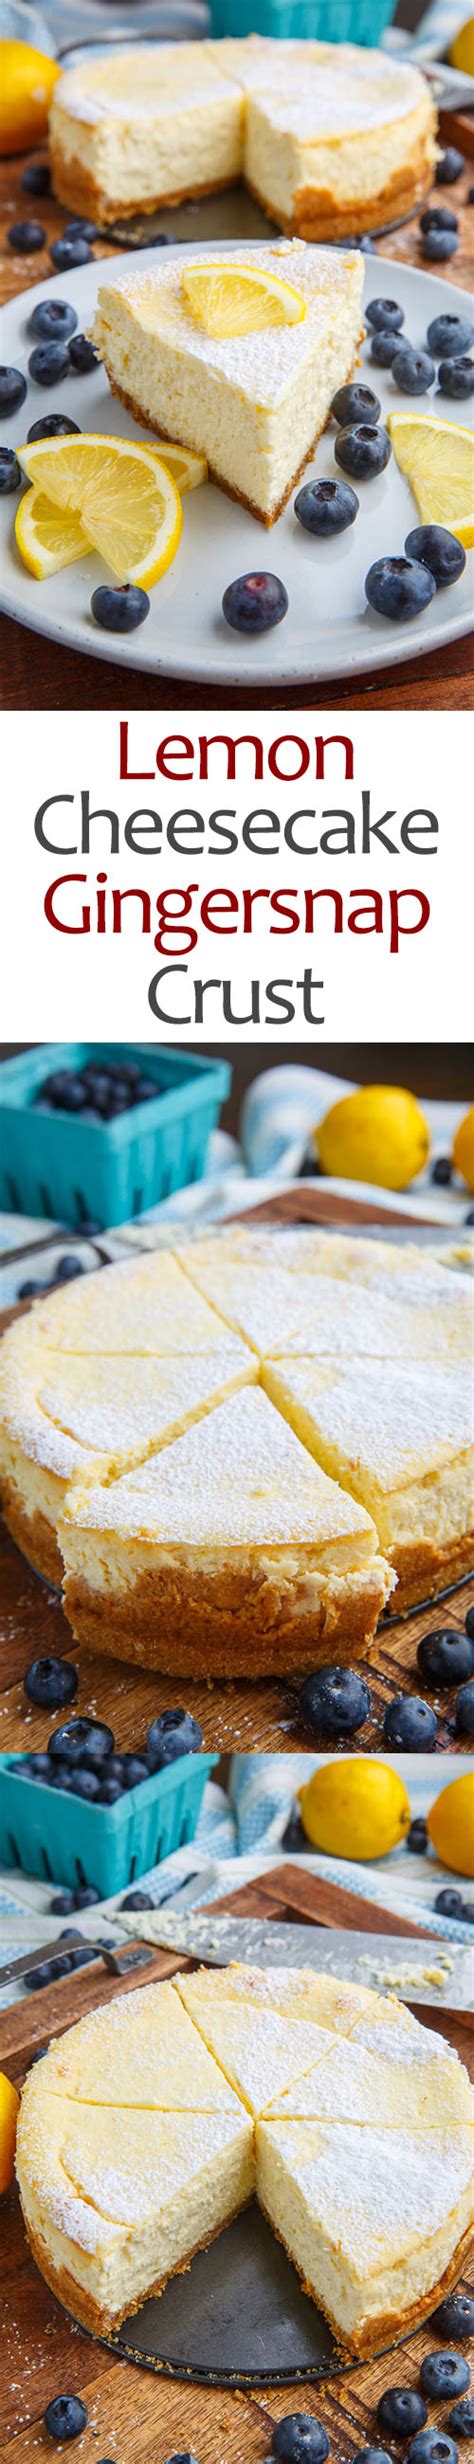 lemon-new-york-style-cheesecake-with-gingersnap-crust image